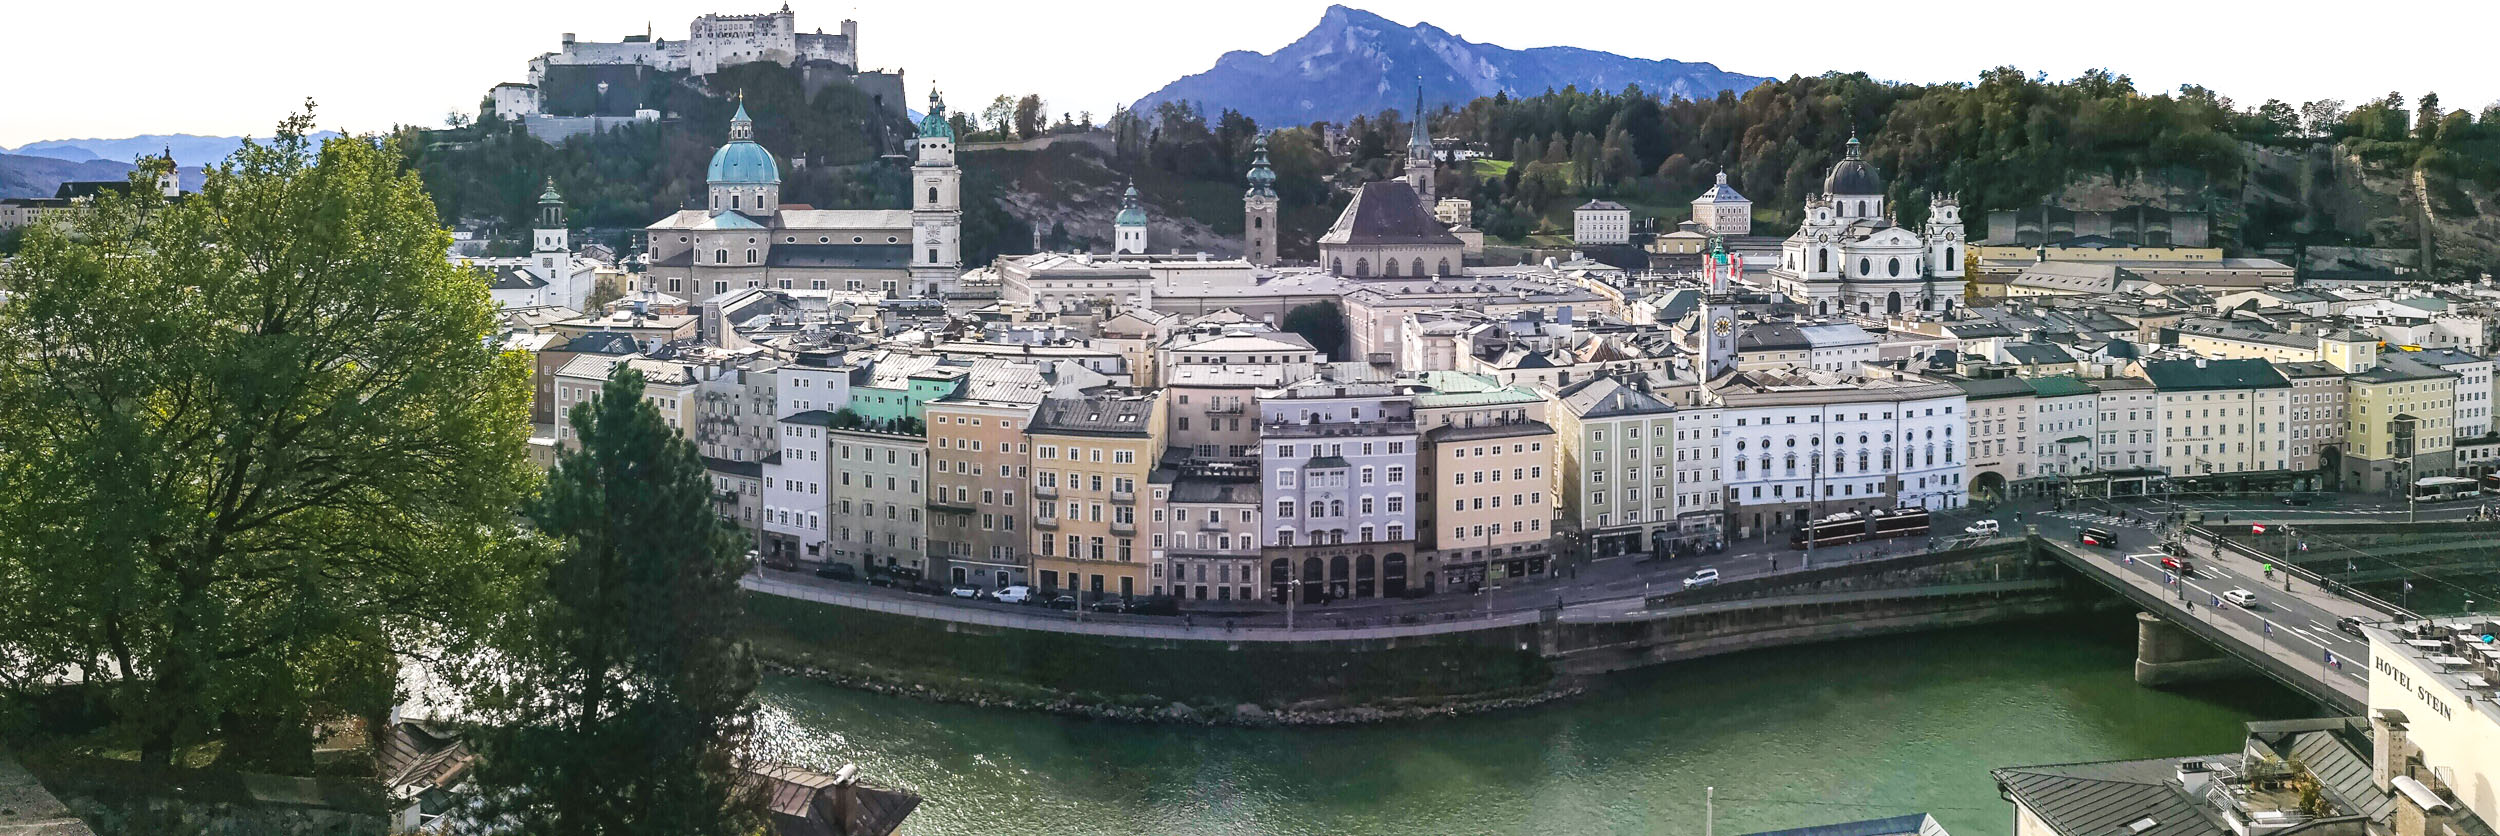 Salzburg panorama, Austria